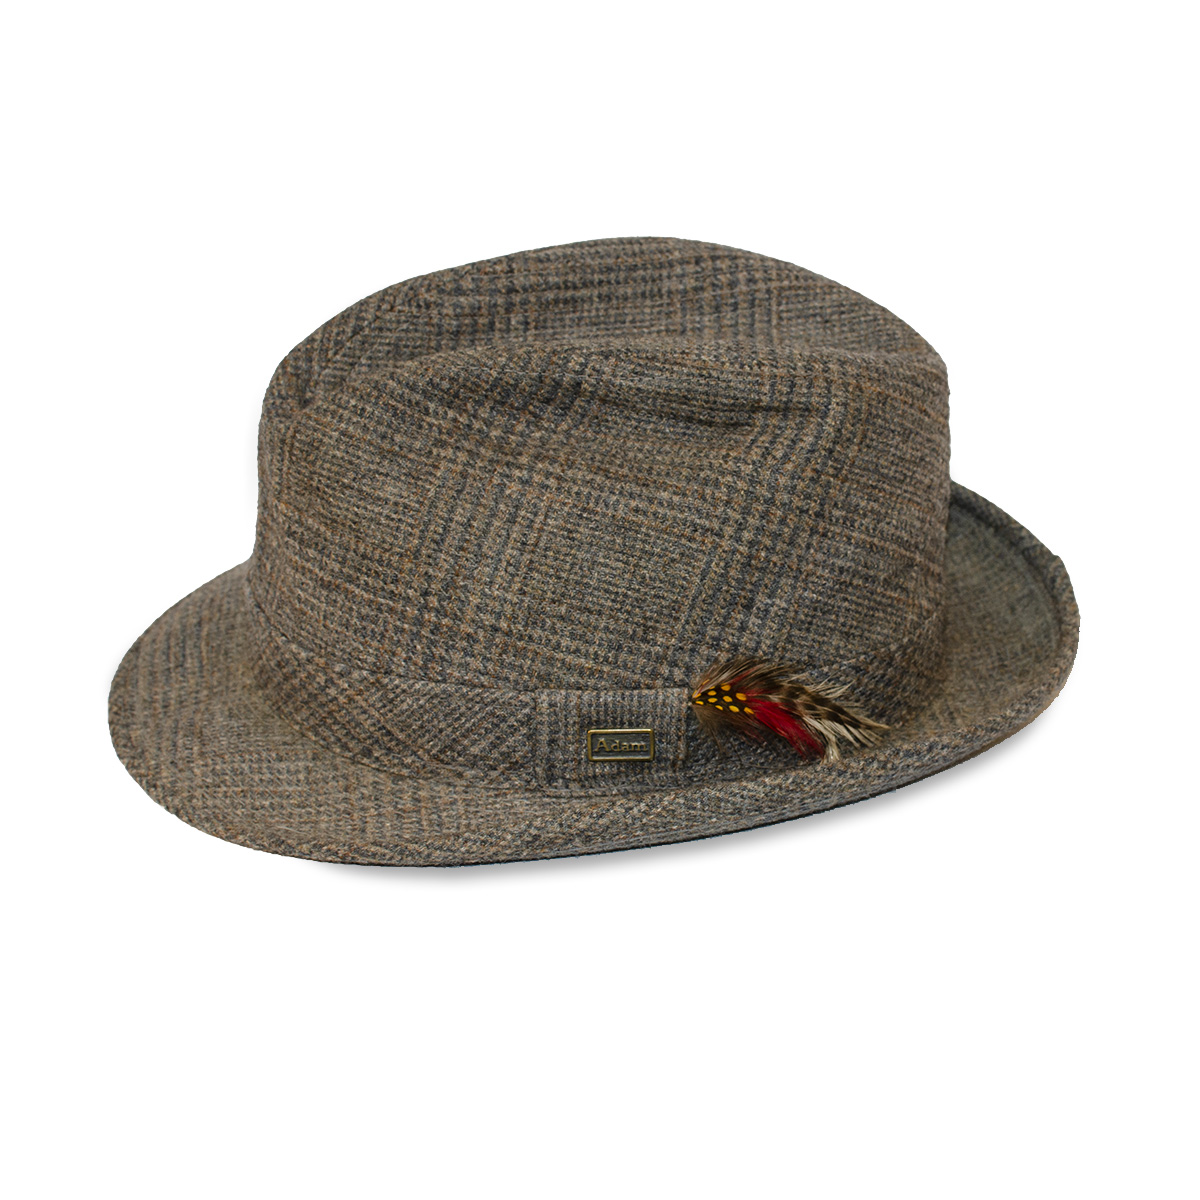 vintage adam hats trilby